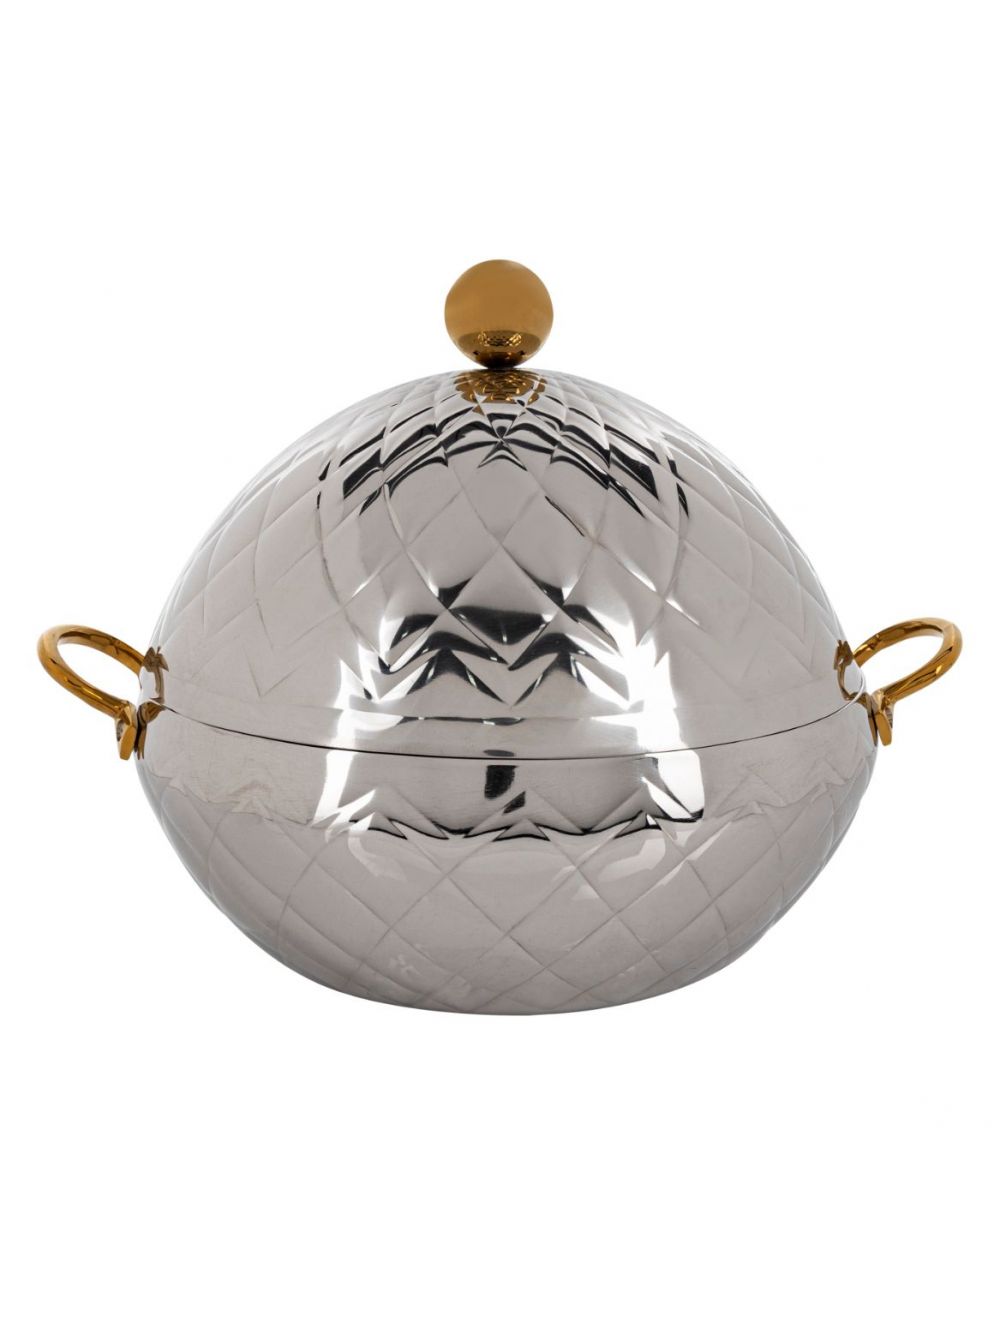 Royalford 5L SS Mughal Dome Hot pot